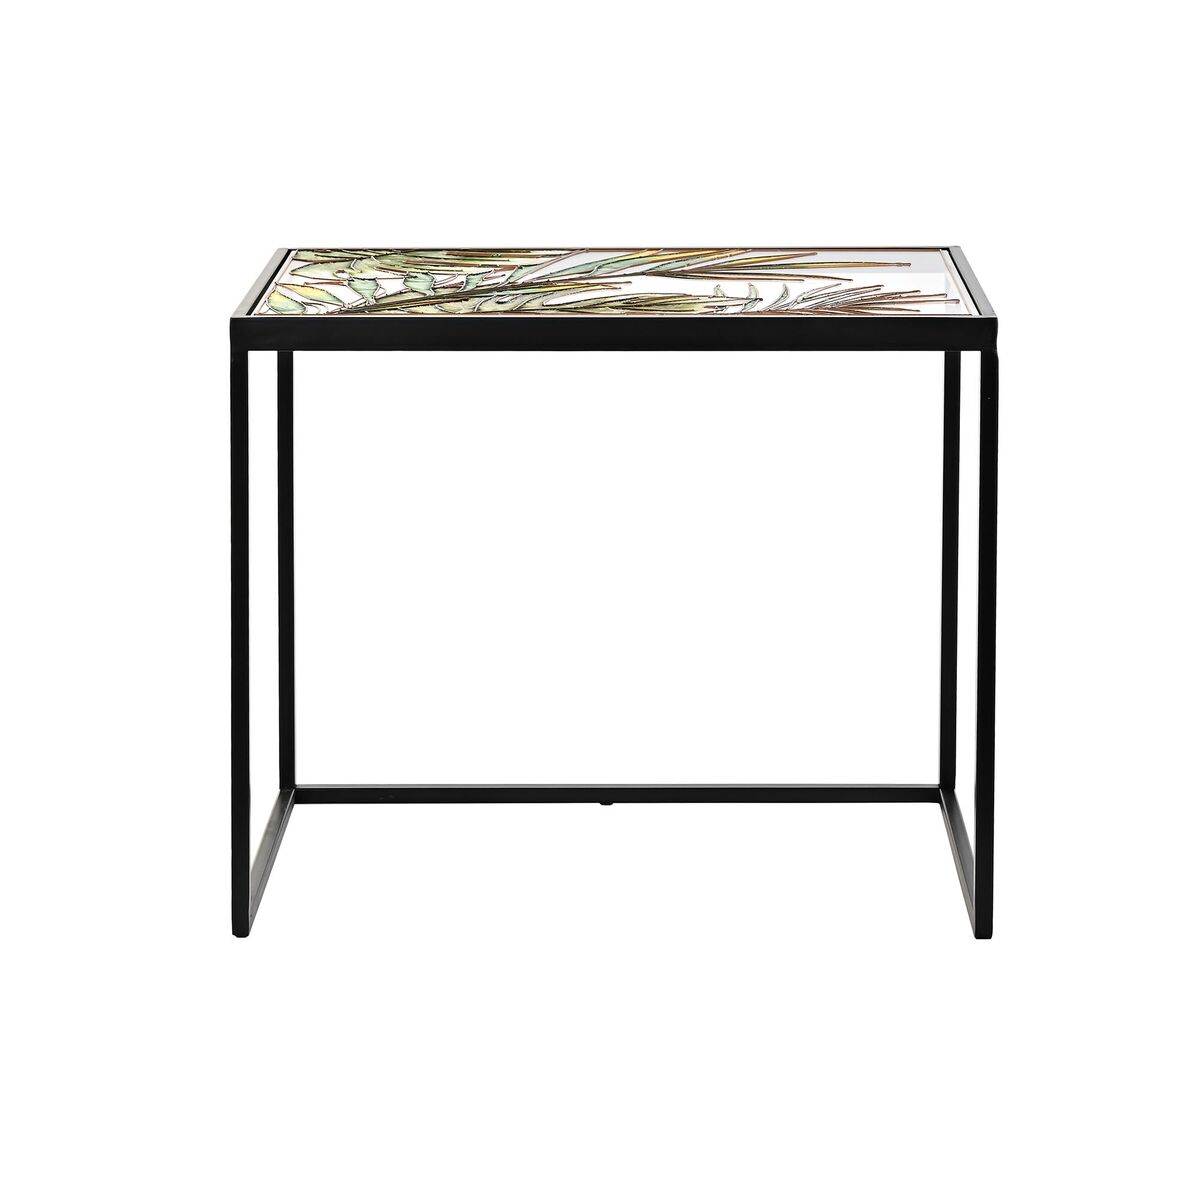 Set of 3 tables DKD Home Decor Crystal Black Golden Metal Green 60 x 40 x 50 cm